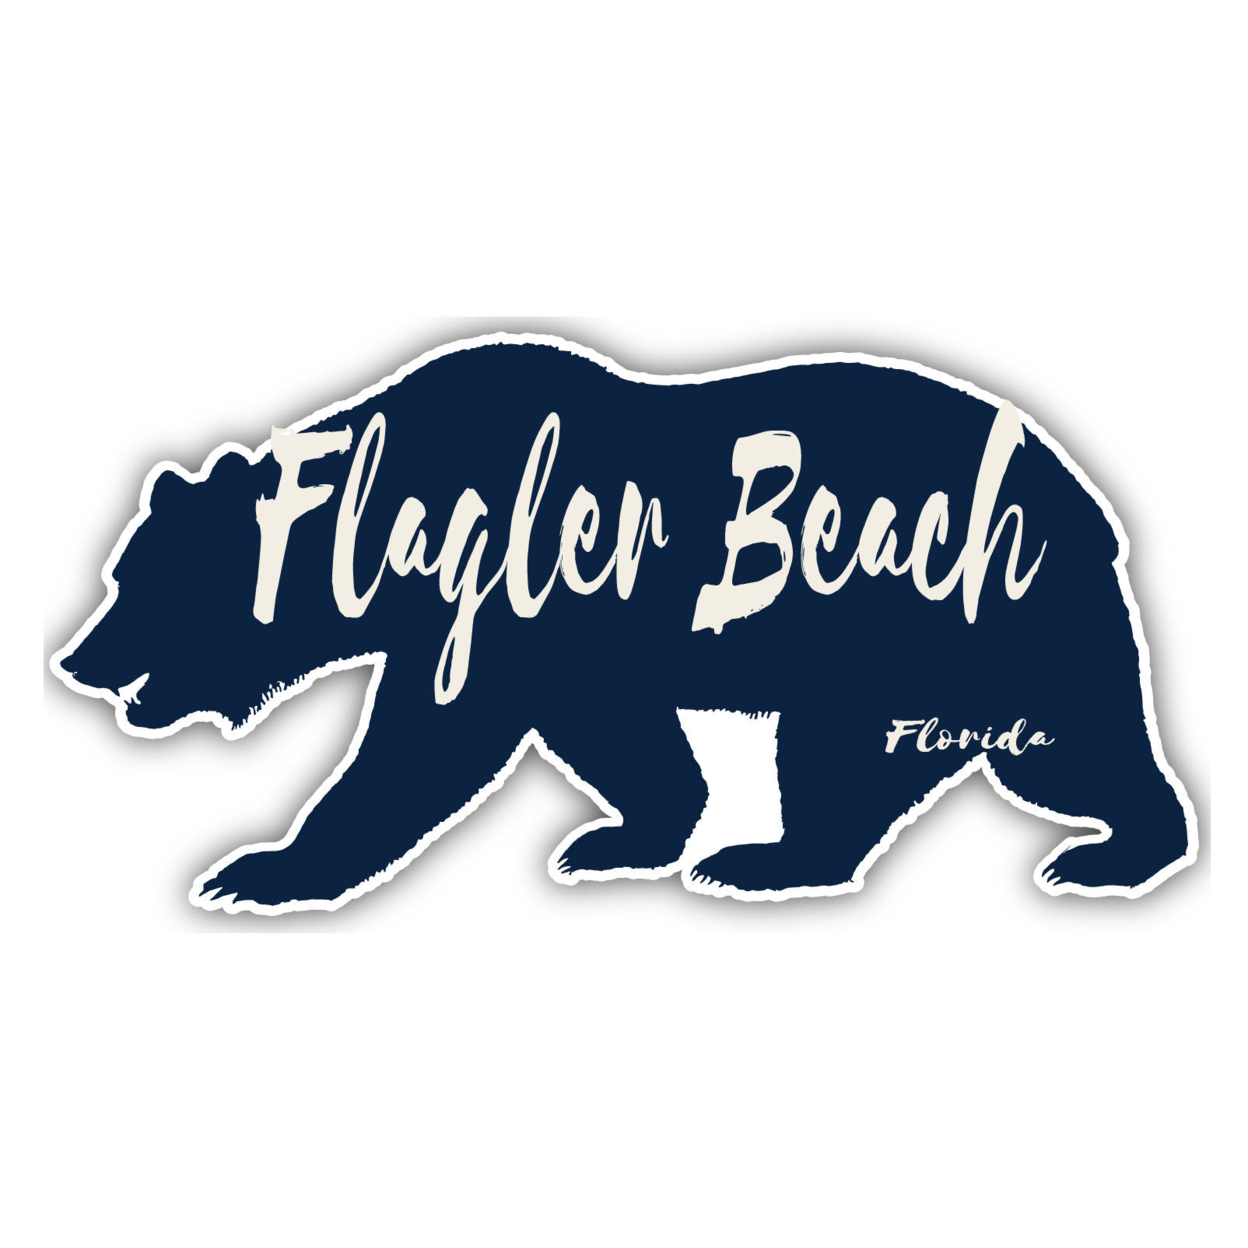 Flagler Beach Florida Souvenir Decorative Stickers (Choose Theme And Size) - Single Unit, 6-Inch, Camp Life